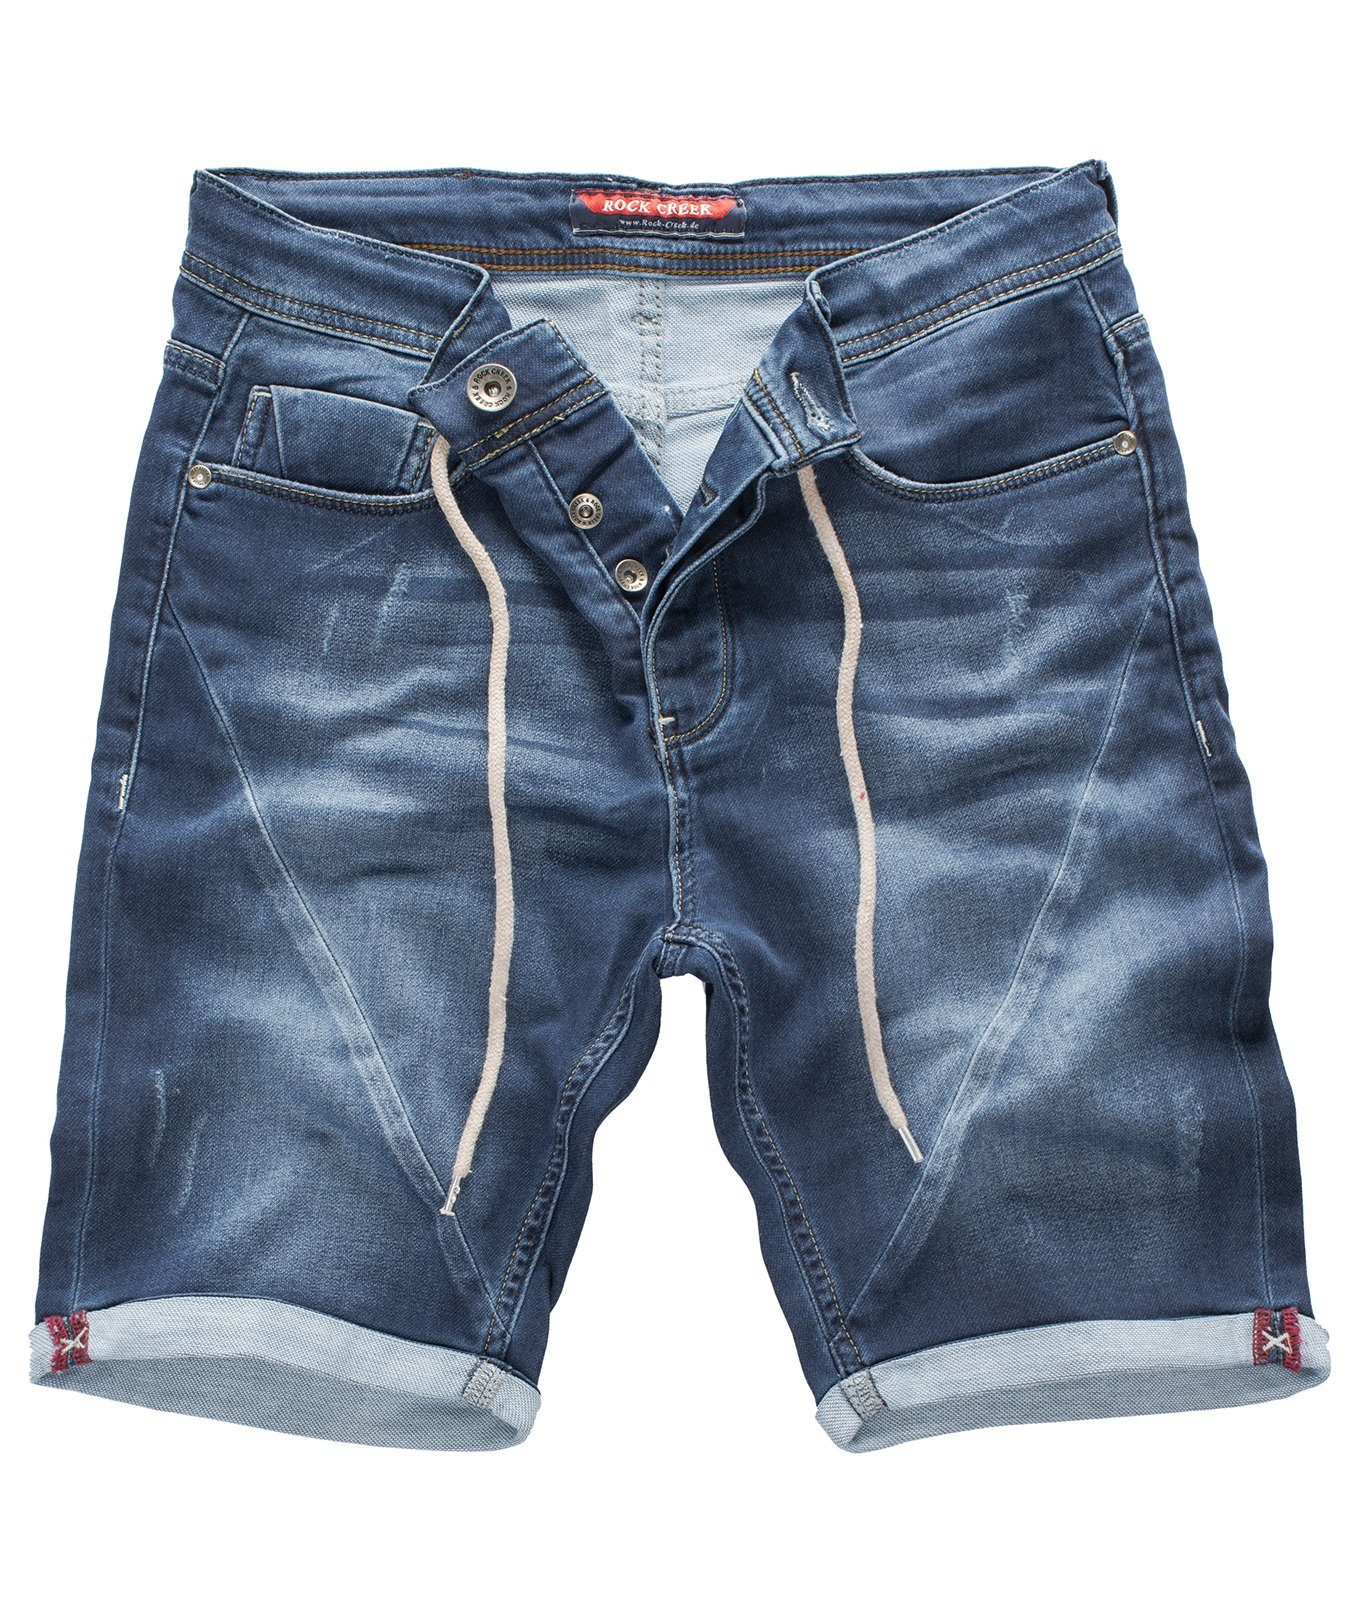 Rock Creek Jeansshorts Herren RC-2200 Sweat Royalblau Shorts Jeans Shorts